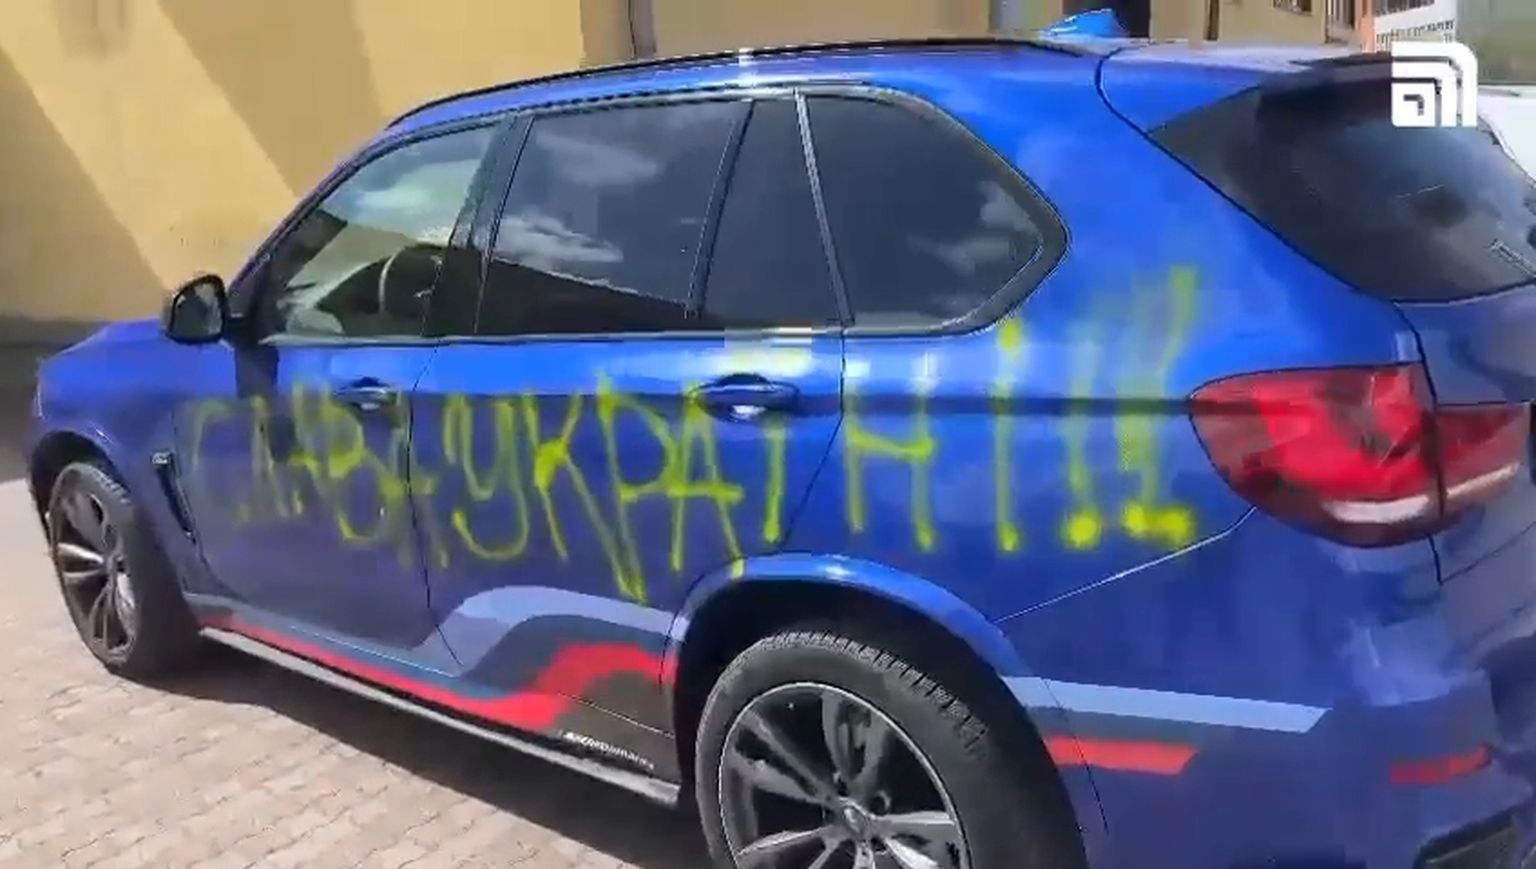 Надписи "Слава Украине" и "Героям слава!" на автомобиле